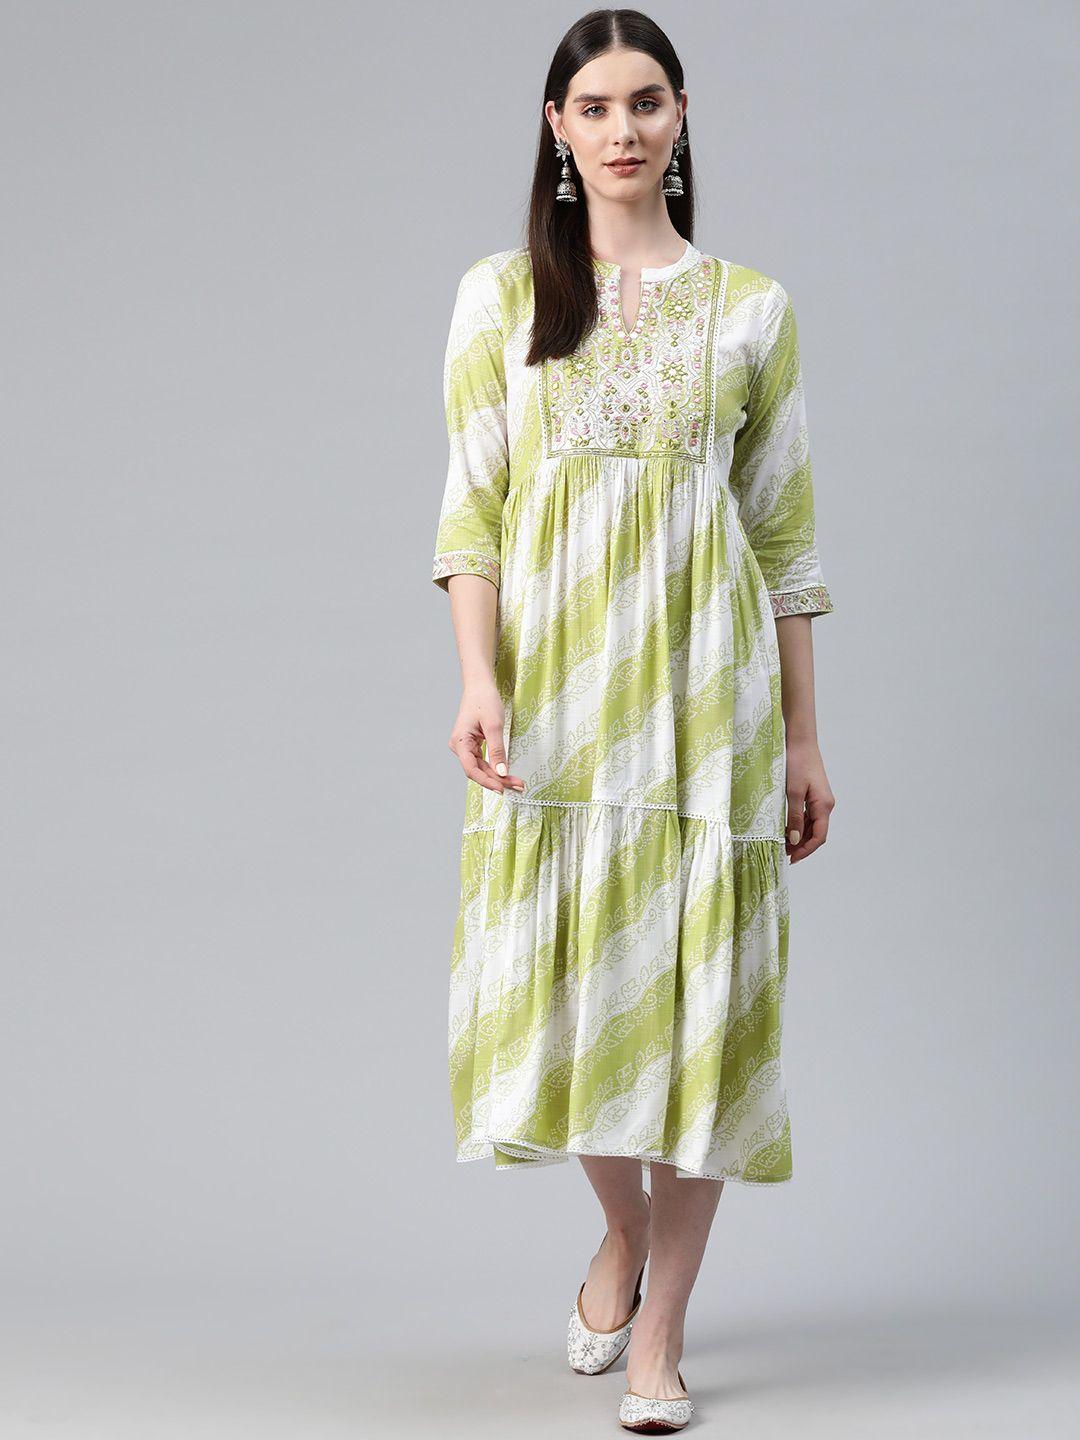 readiprint fashions green & white ethnic motifs print tiered a-line midi dress